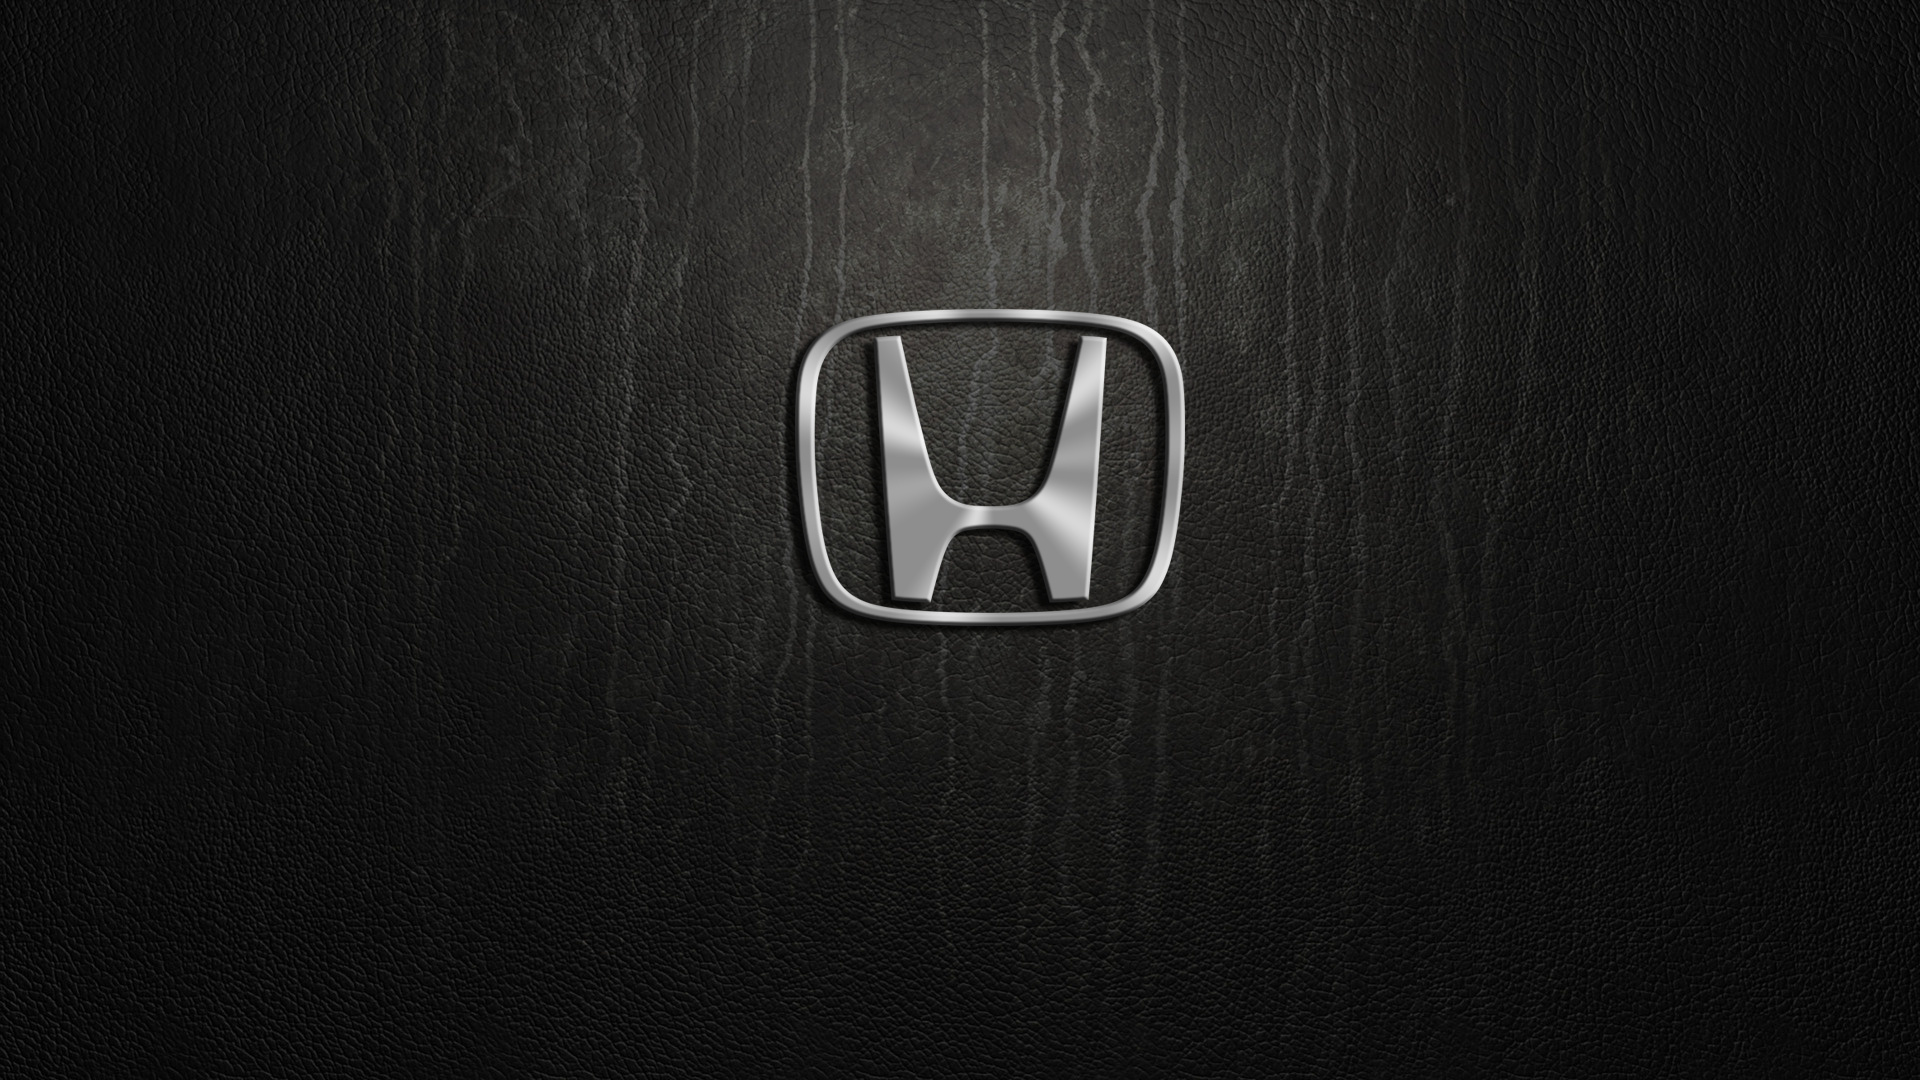 Honda logo, Striking wallpapers, Eye-catching backgrounds, 1920x1080 Full HD Desktop